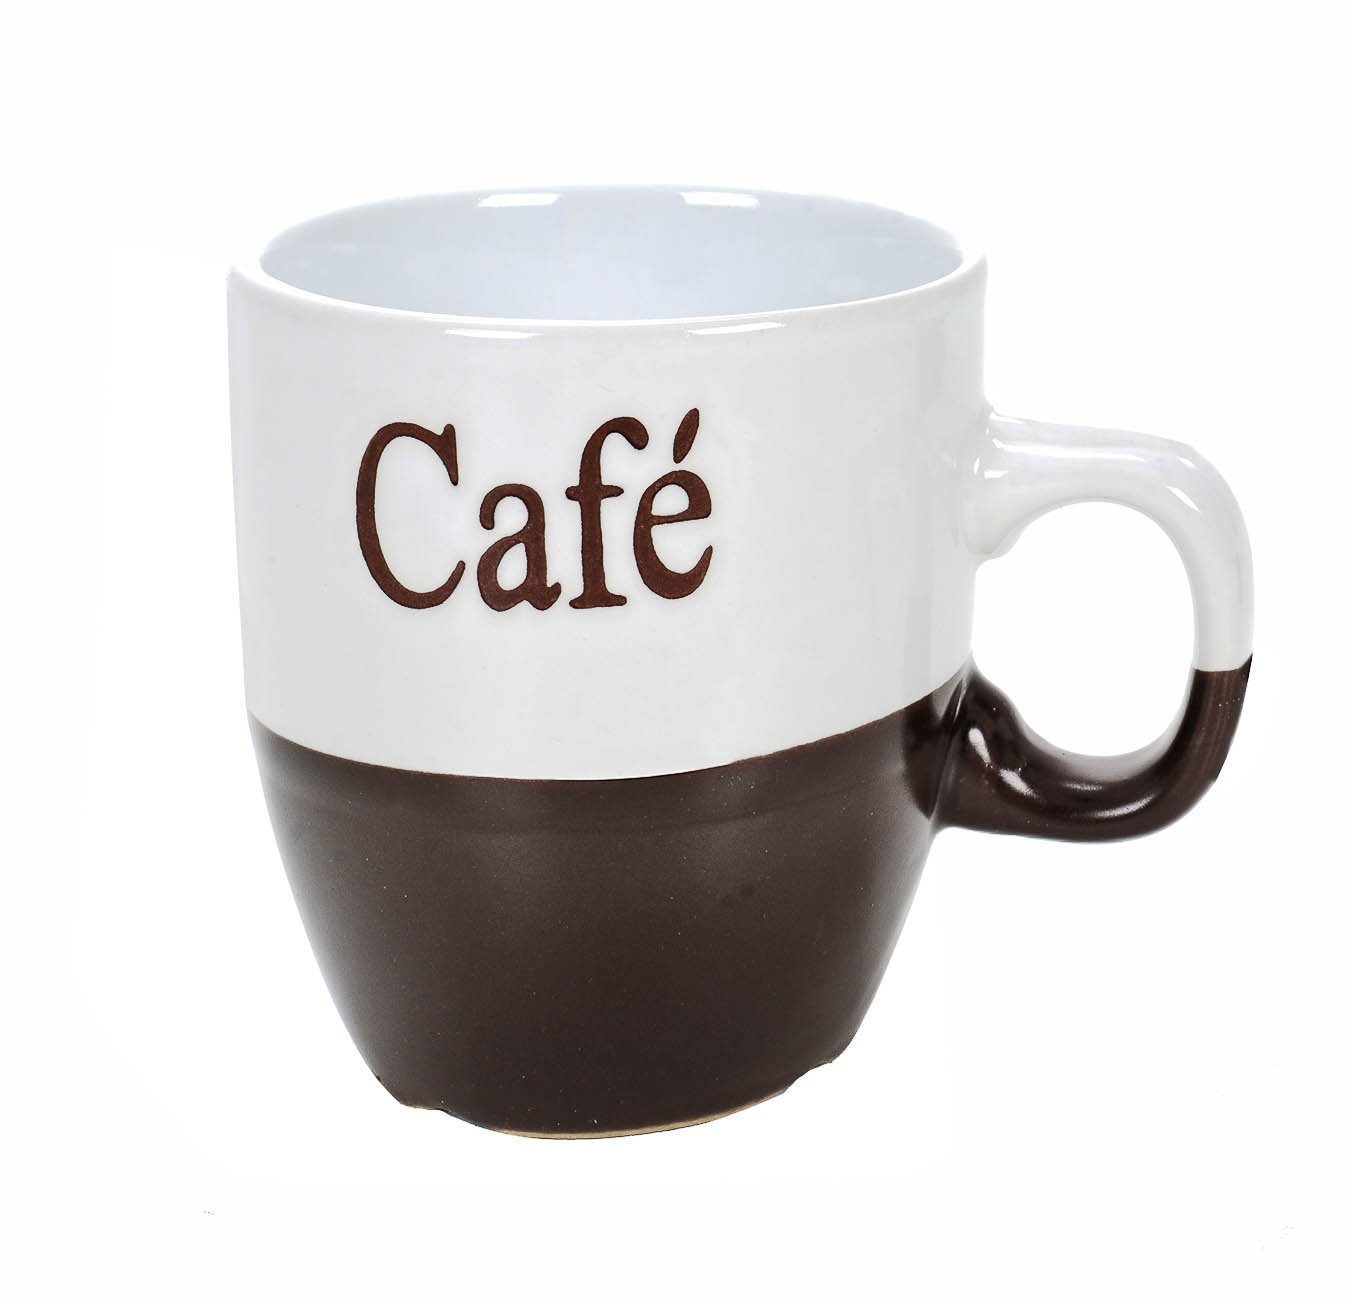 für Keramik-Tassen Espressotasse, Café Kaffeetasse, Bubble-Store Aufschrift Kaffeetassen, Cappuccinotasse 2-er Aufschrift Espresso, braun/weiß Set Café mit Keramik,